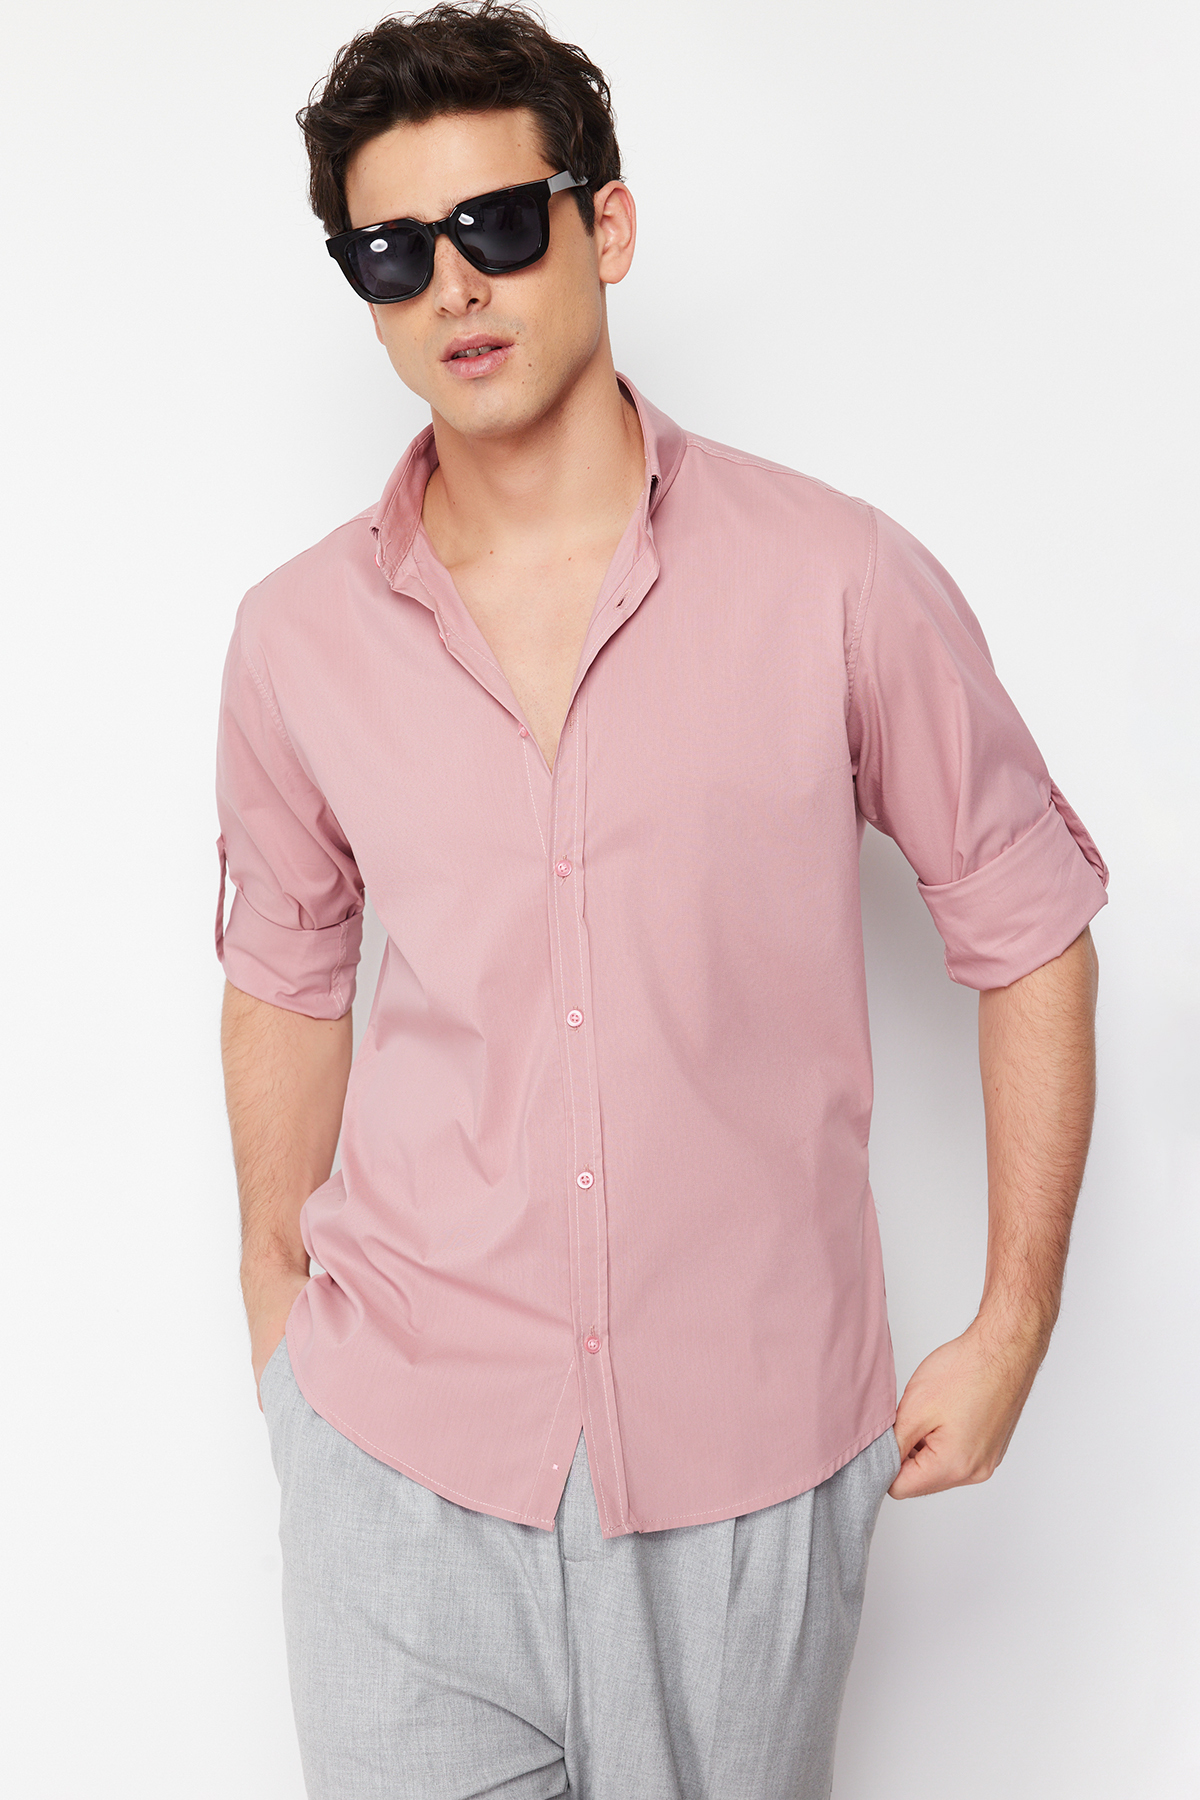 Trendyol Dusty Rose Slim Fit Shirt with Epaulets on Sleeves